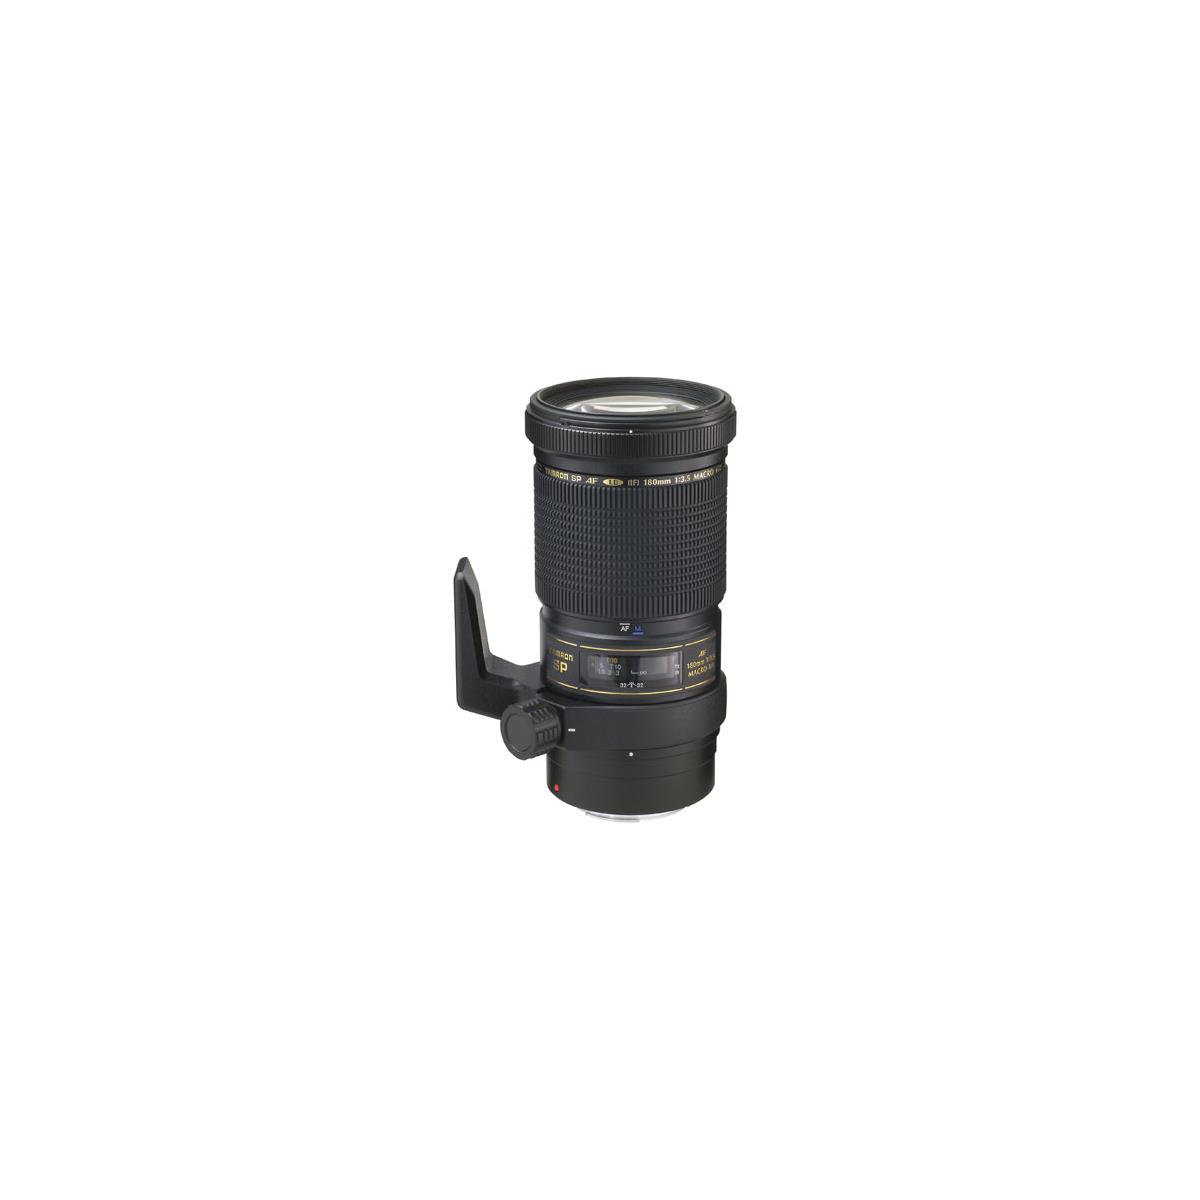 Image of Tamron SP 180mm f/3.5 Di Macro LD-IF Lens for Nikon AF